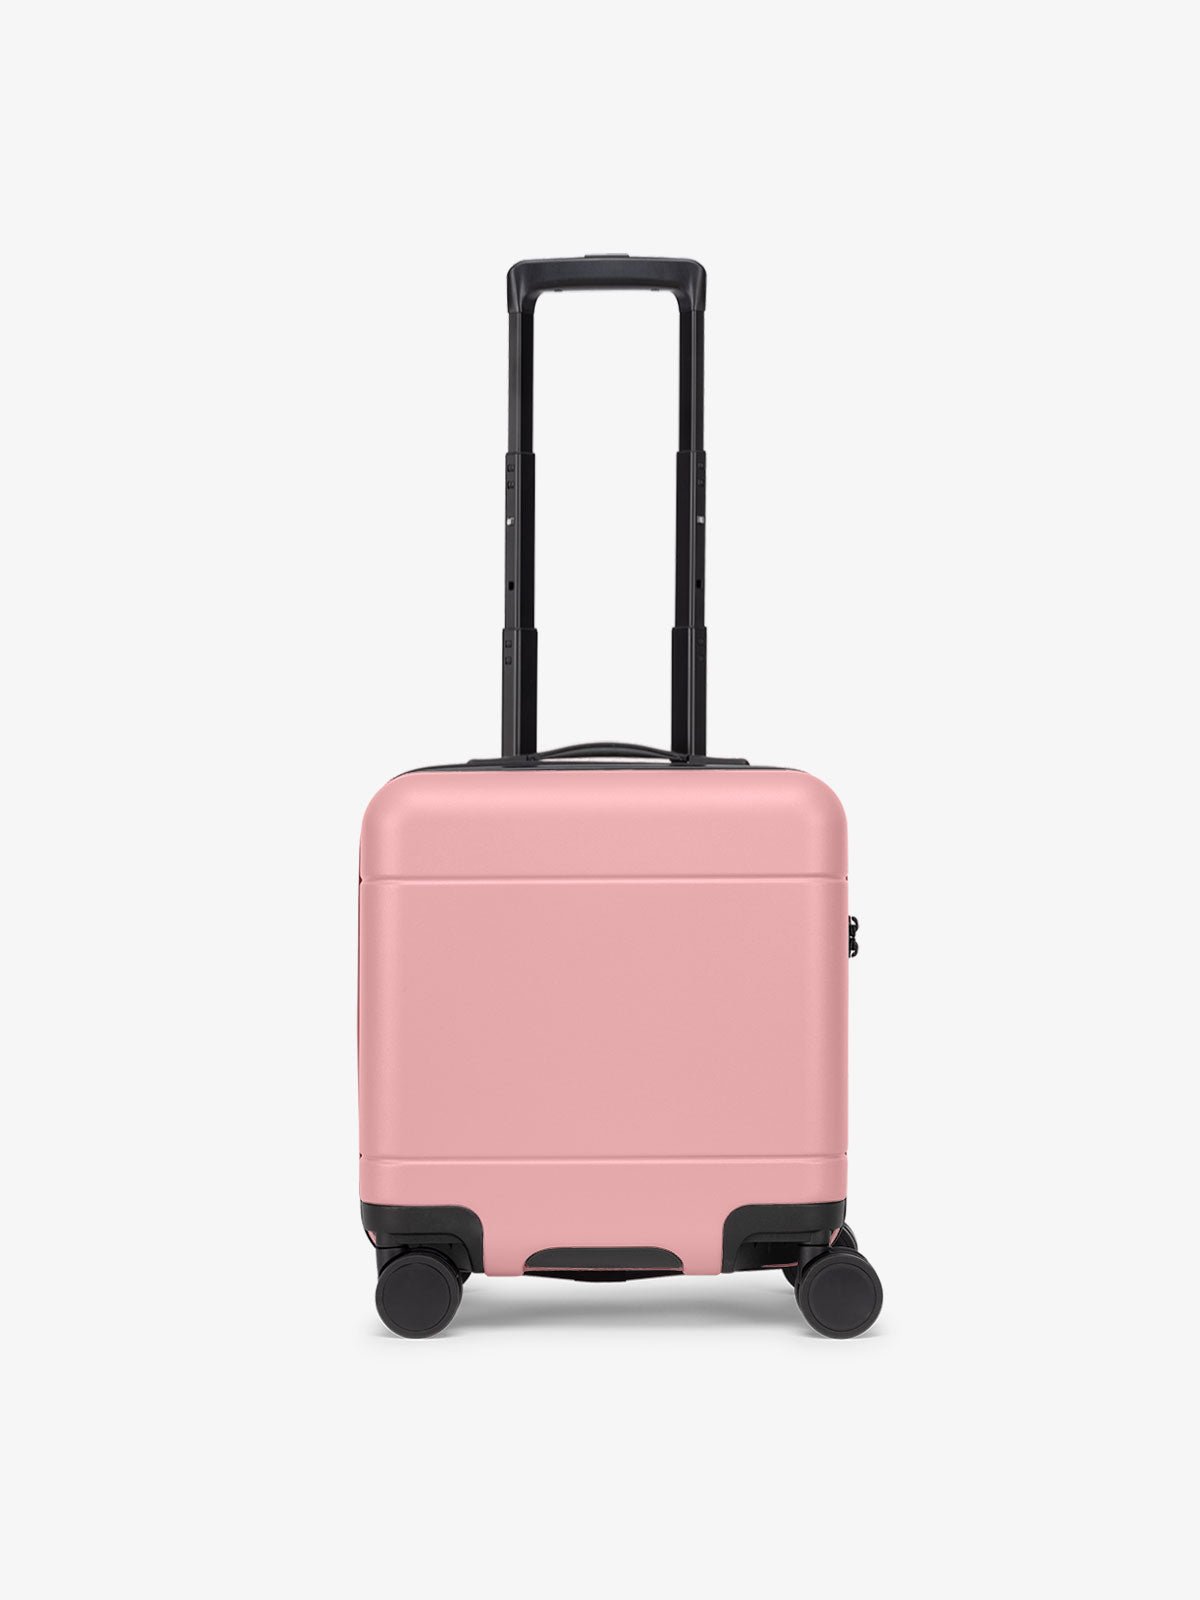 CALPAK Hue Mini Carry-On Luggage in mauve pink